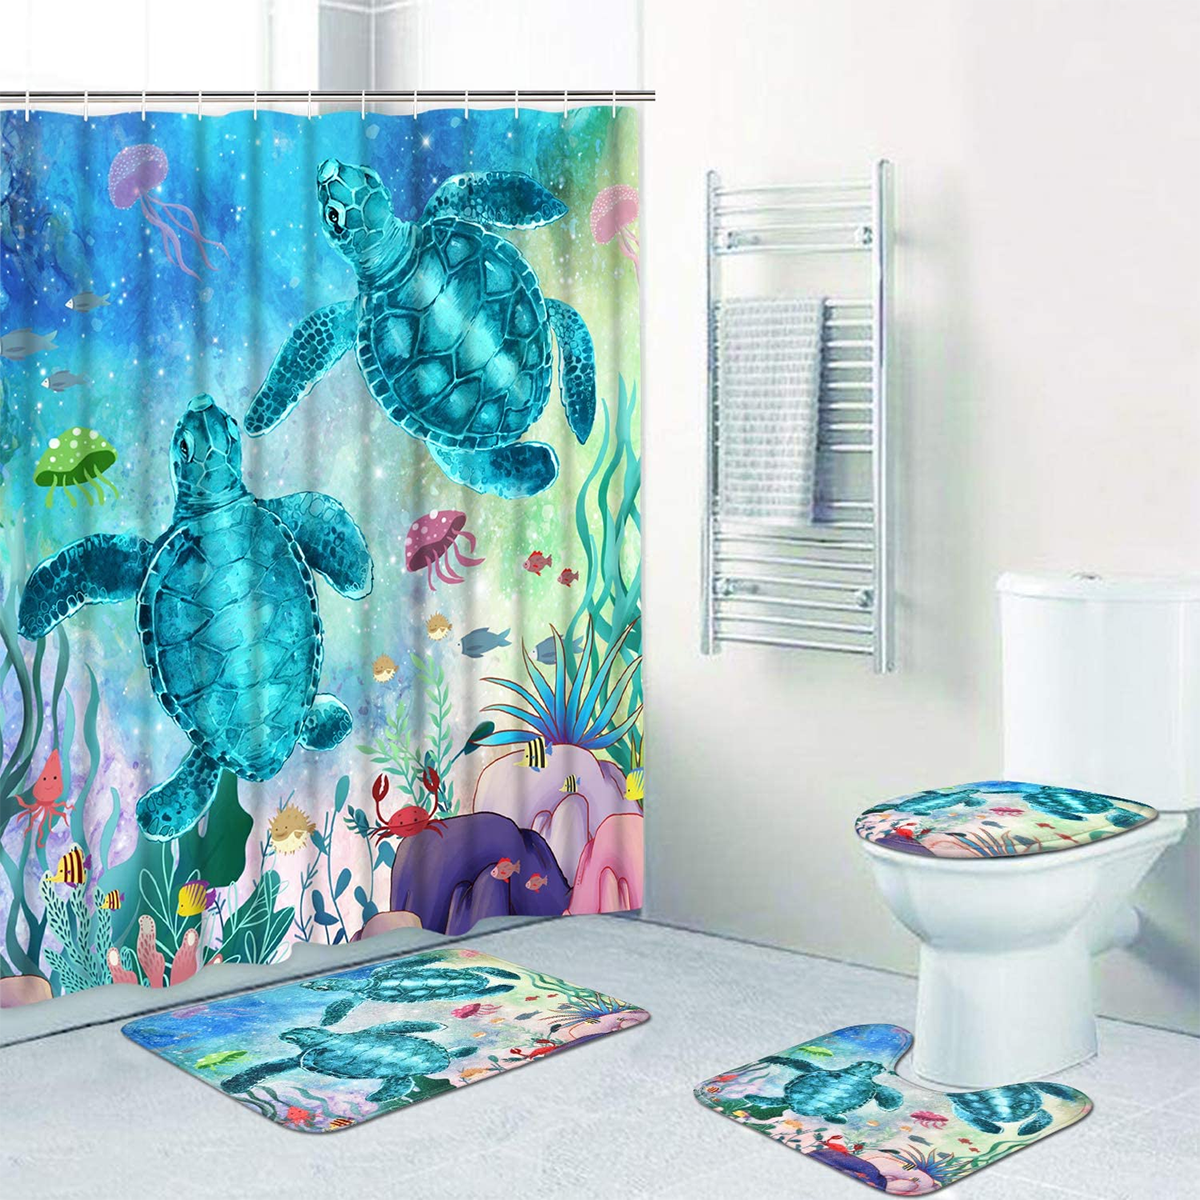 Blue Sea Turtle Bathroom Shower Curtain Bath Mat Toilet Cover Rug Decor Set usa 